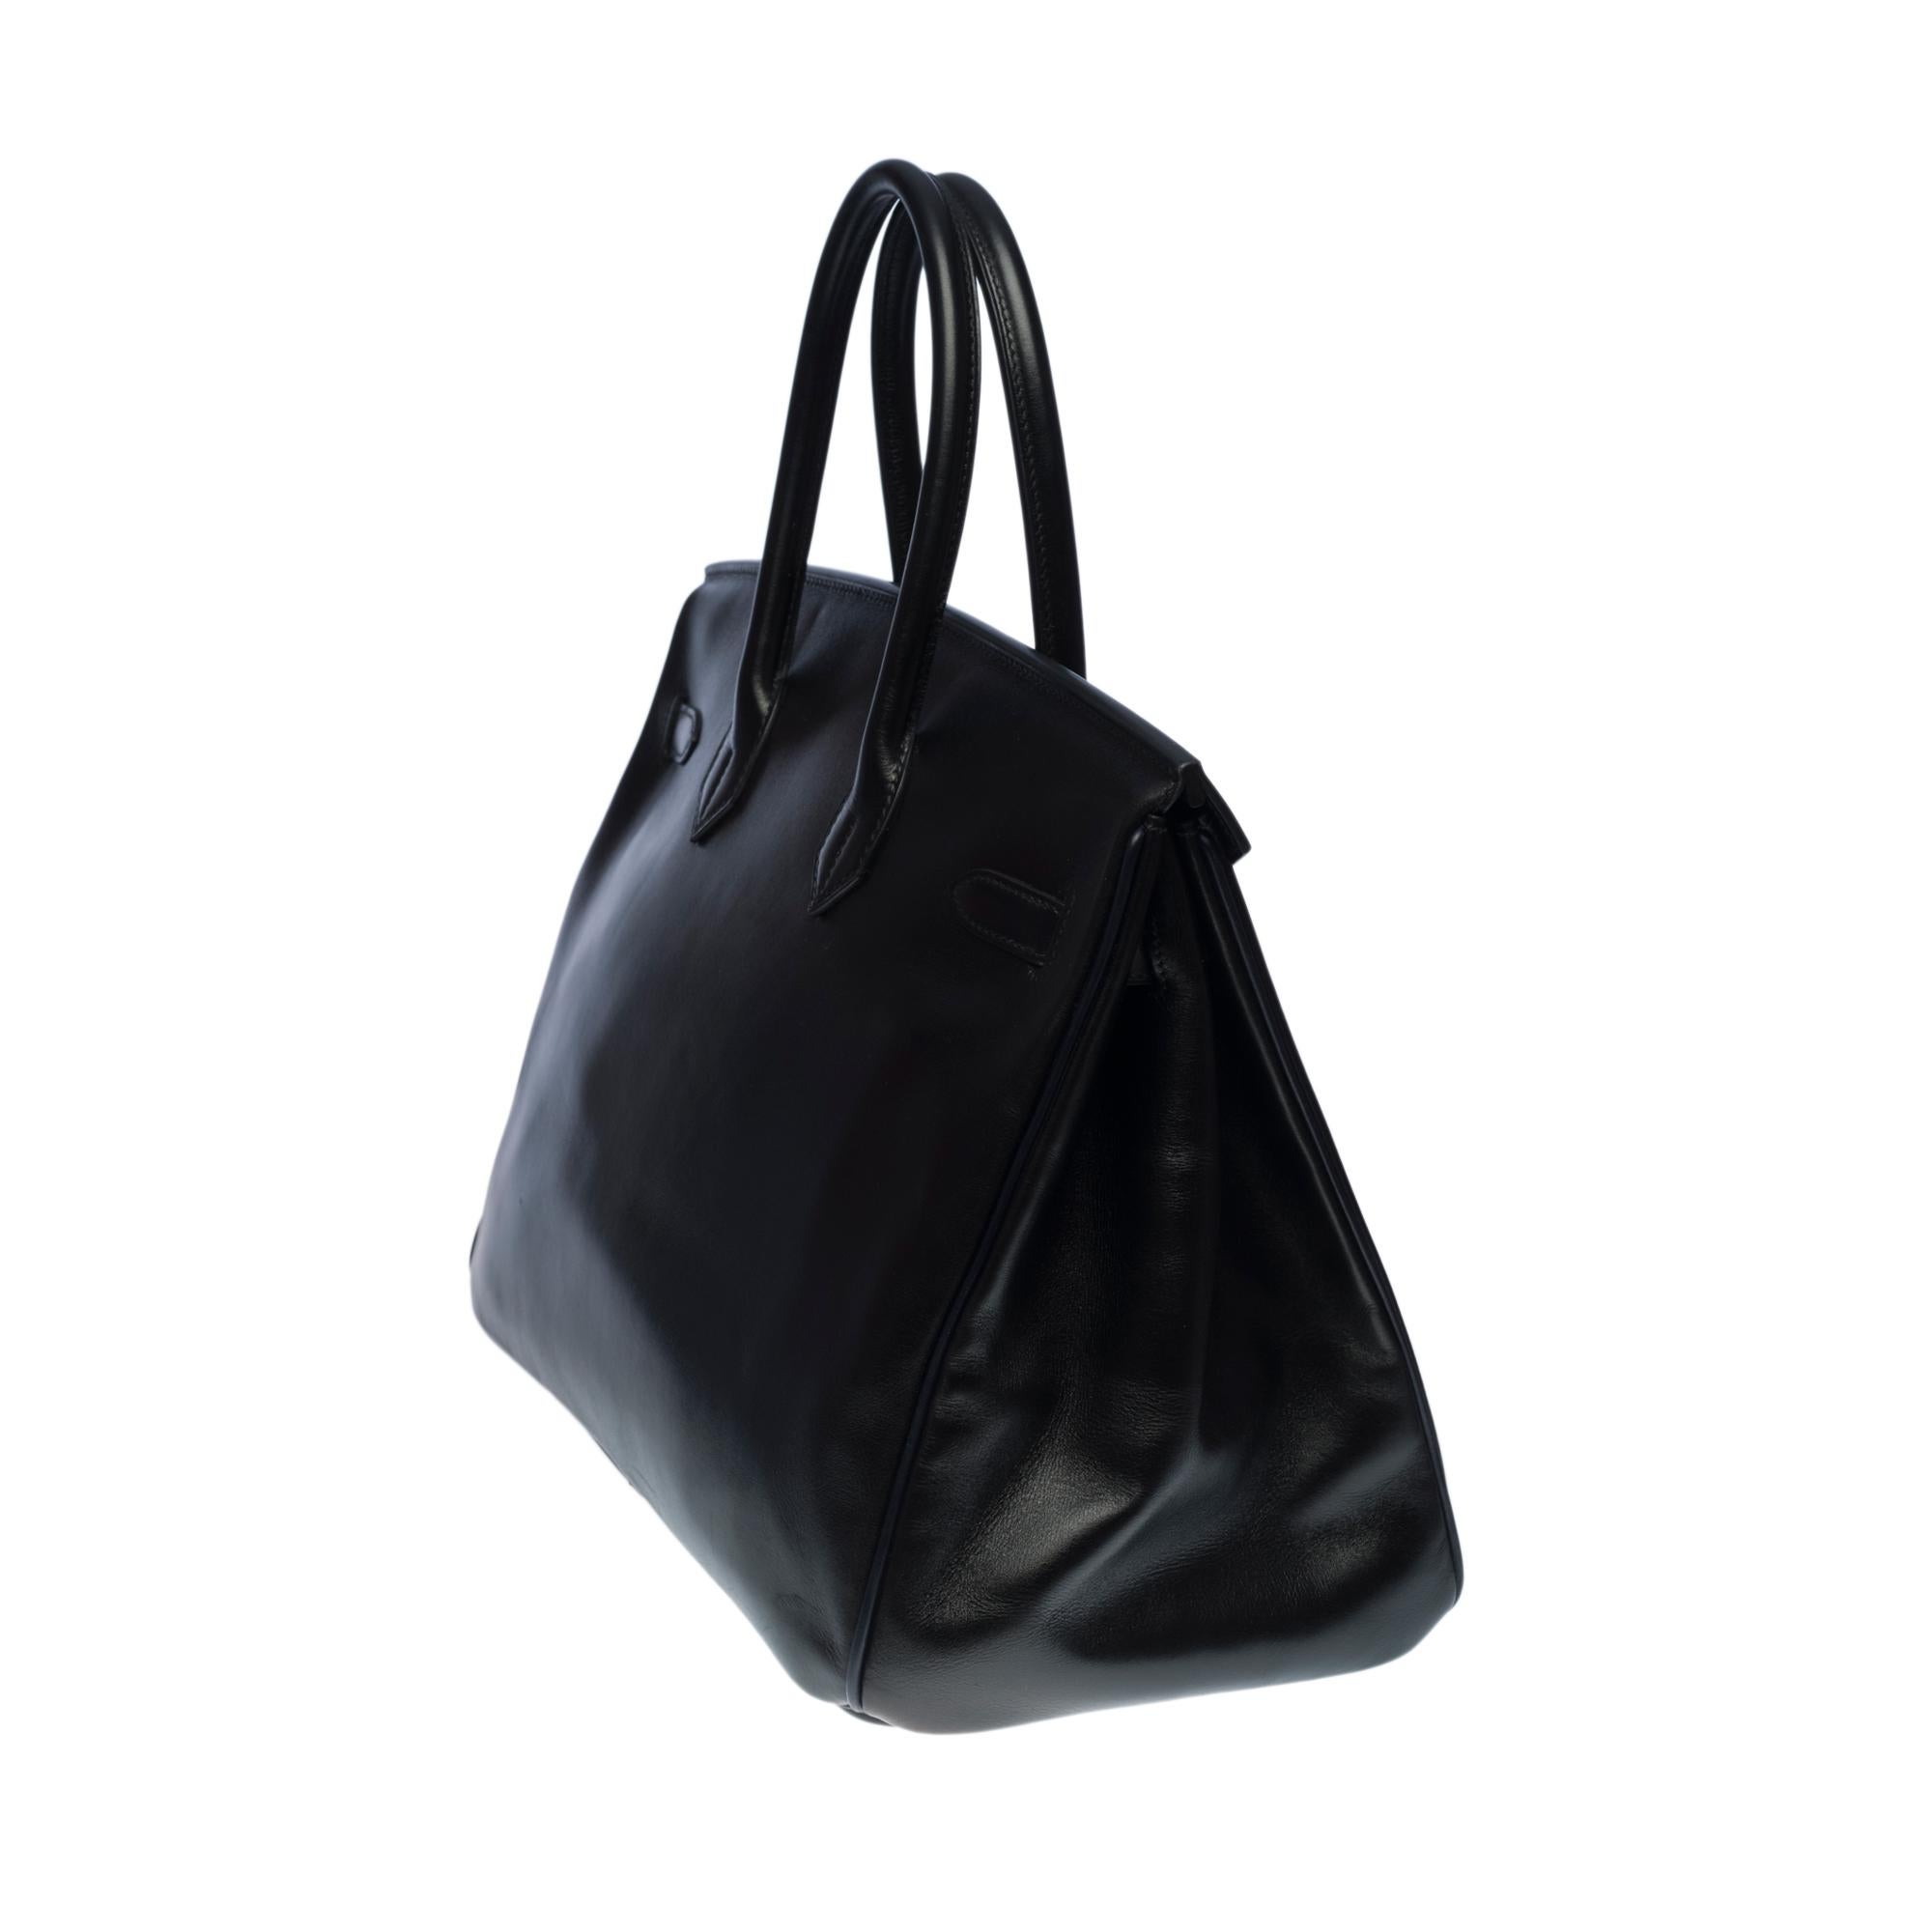 Black Amazing & Rare Hermès Birkin 35 handbag in black box calfskin leather, SHW